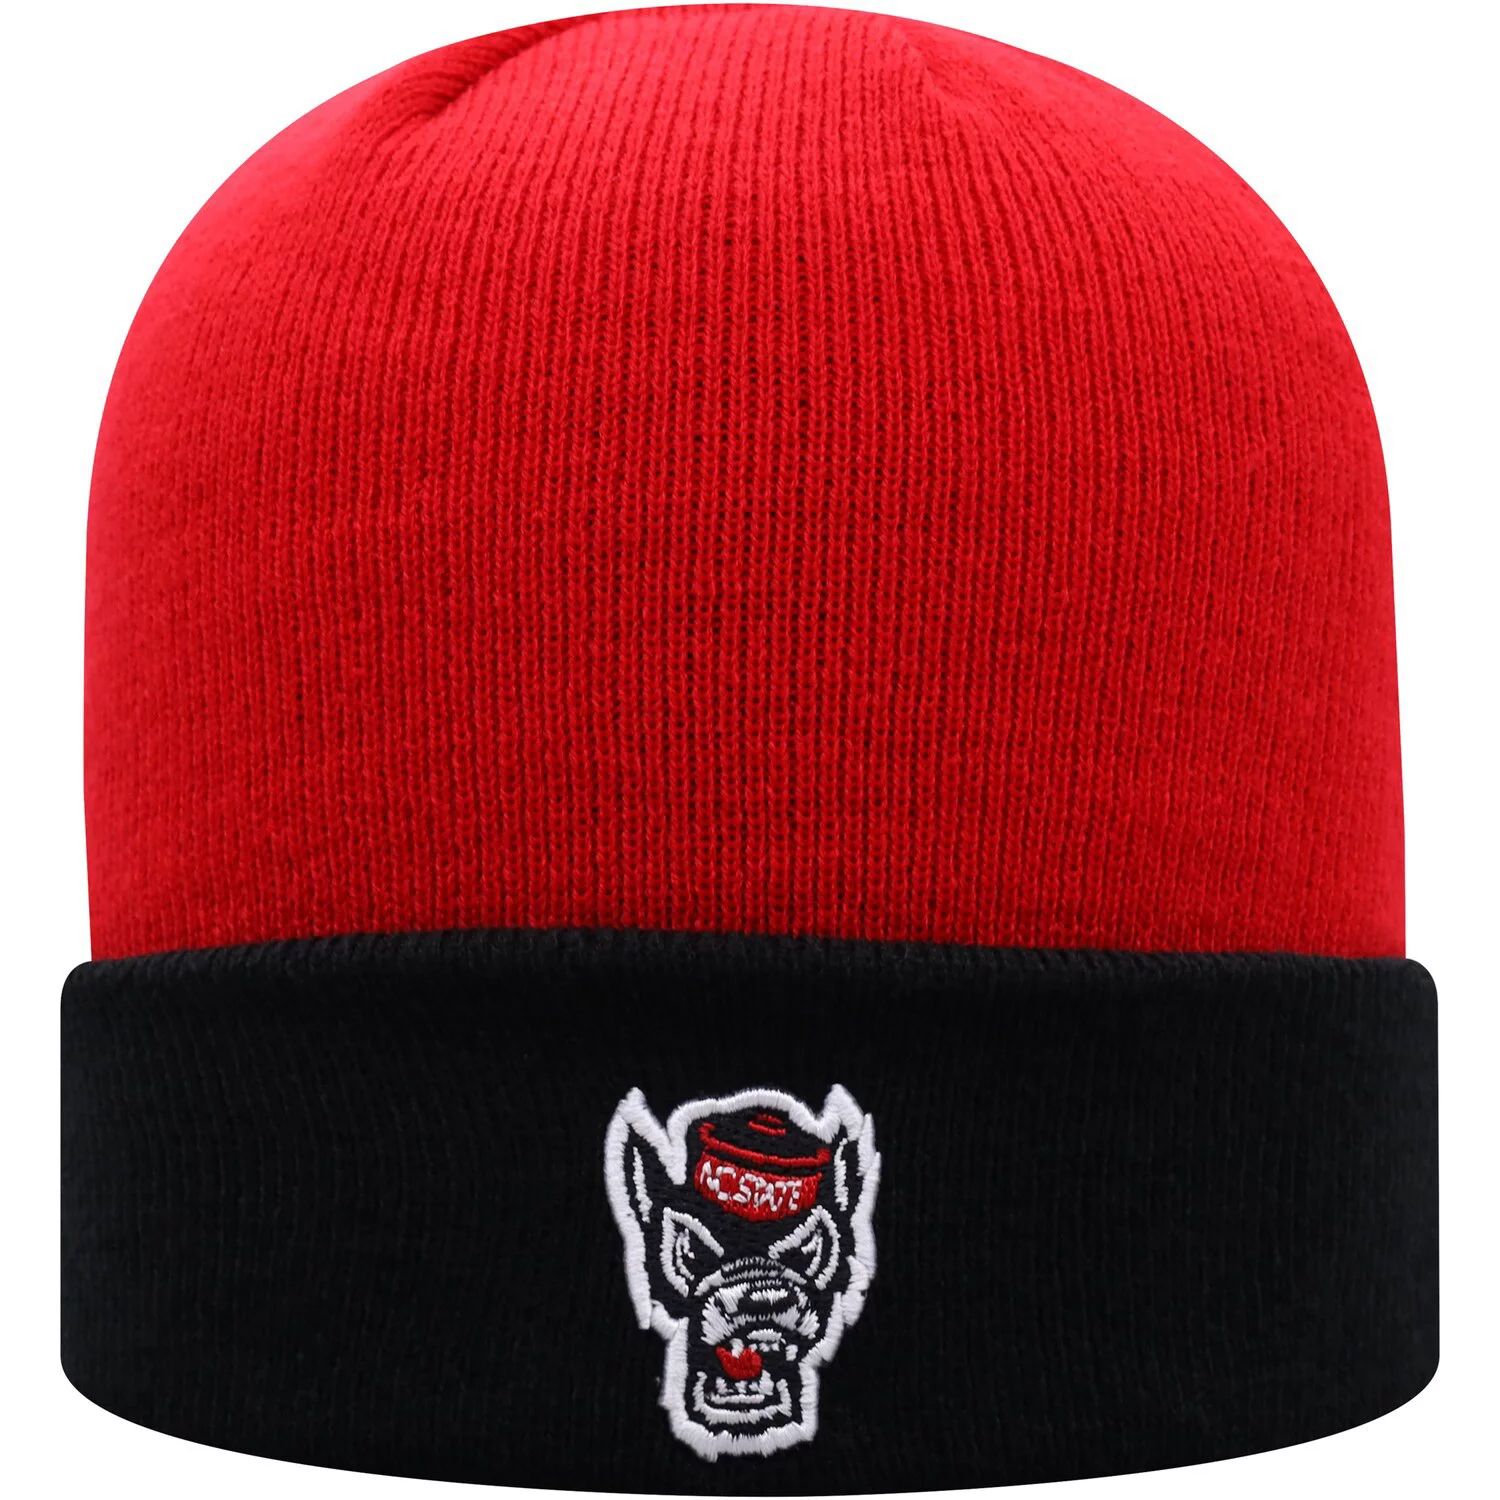 Мужская двухцветная вязаная шапка Top of the World красно-черная NC State Wolfpack Core с манжетами